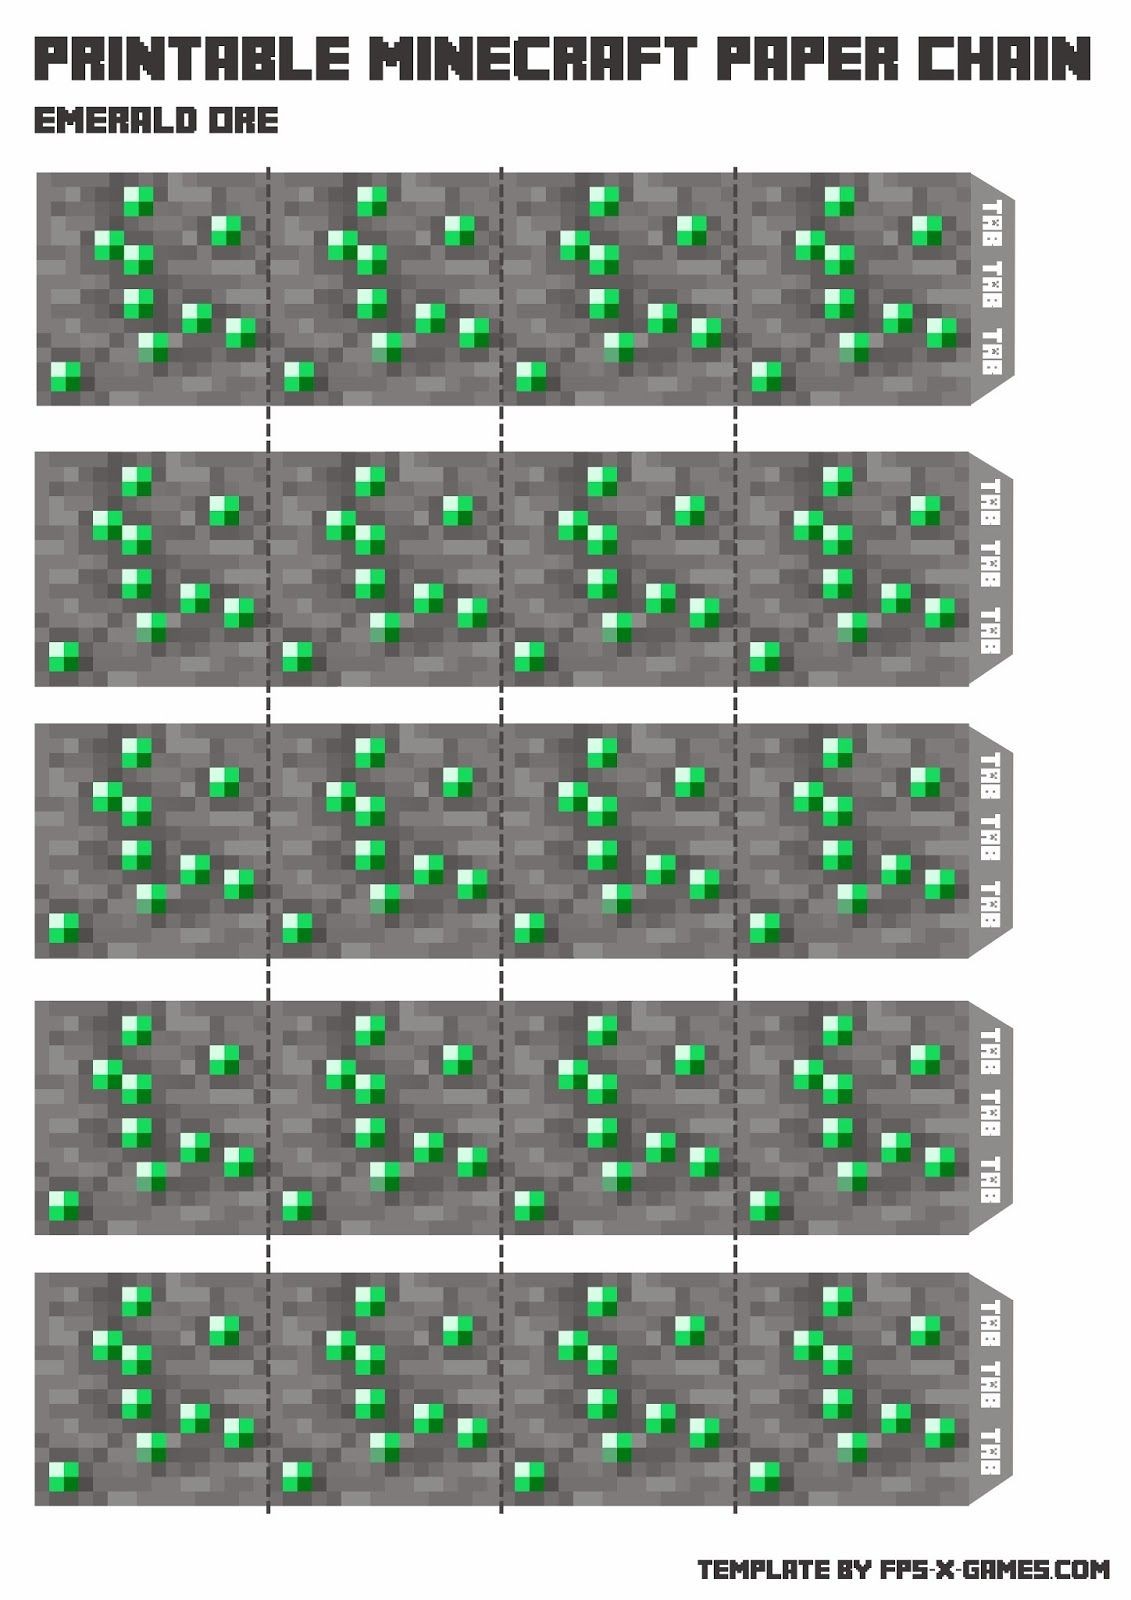 Mindcraft Papercraft Minecraft Papercraft Chain Emerald ore